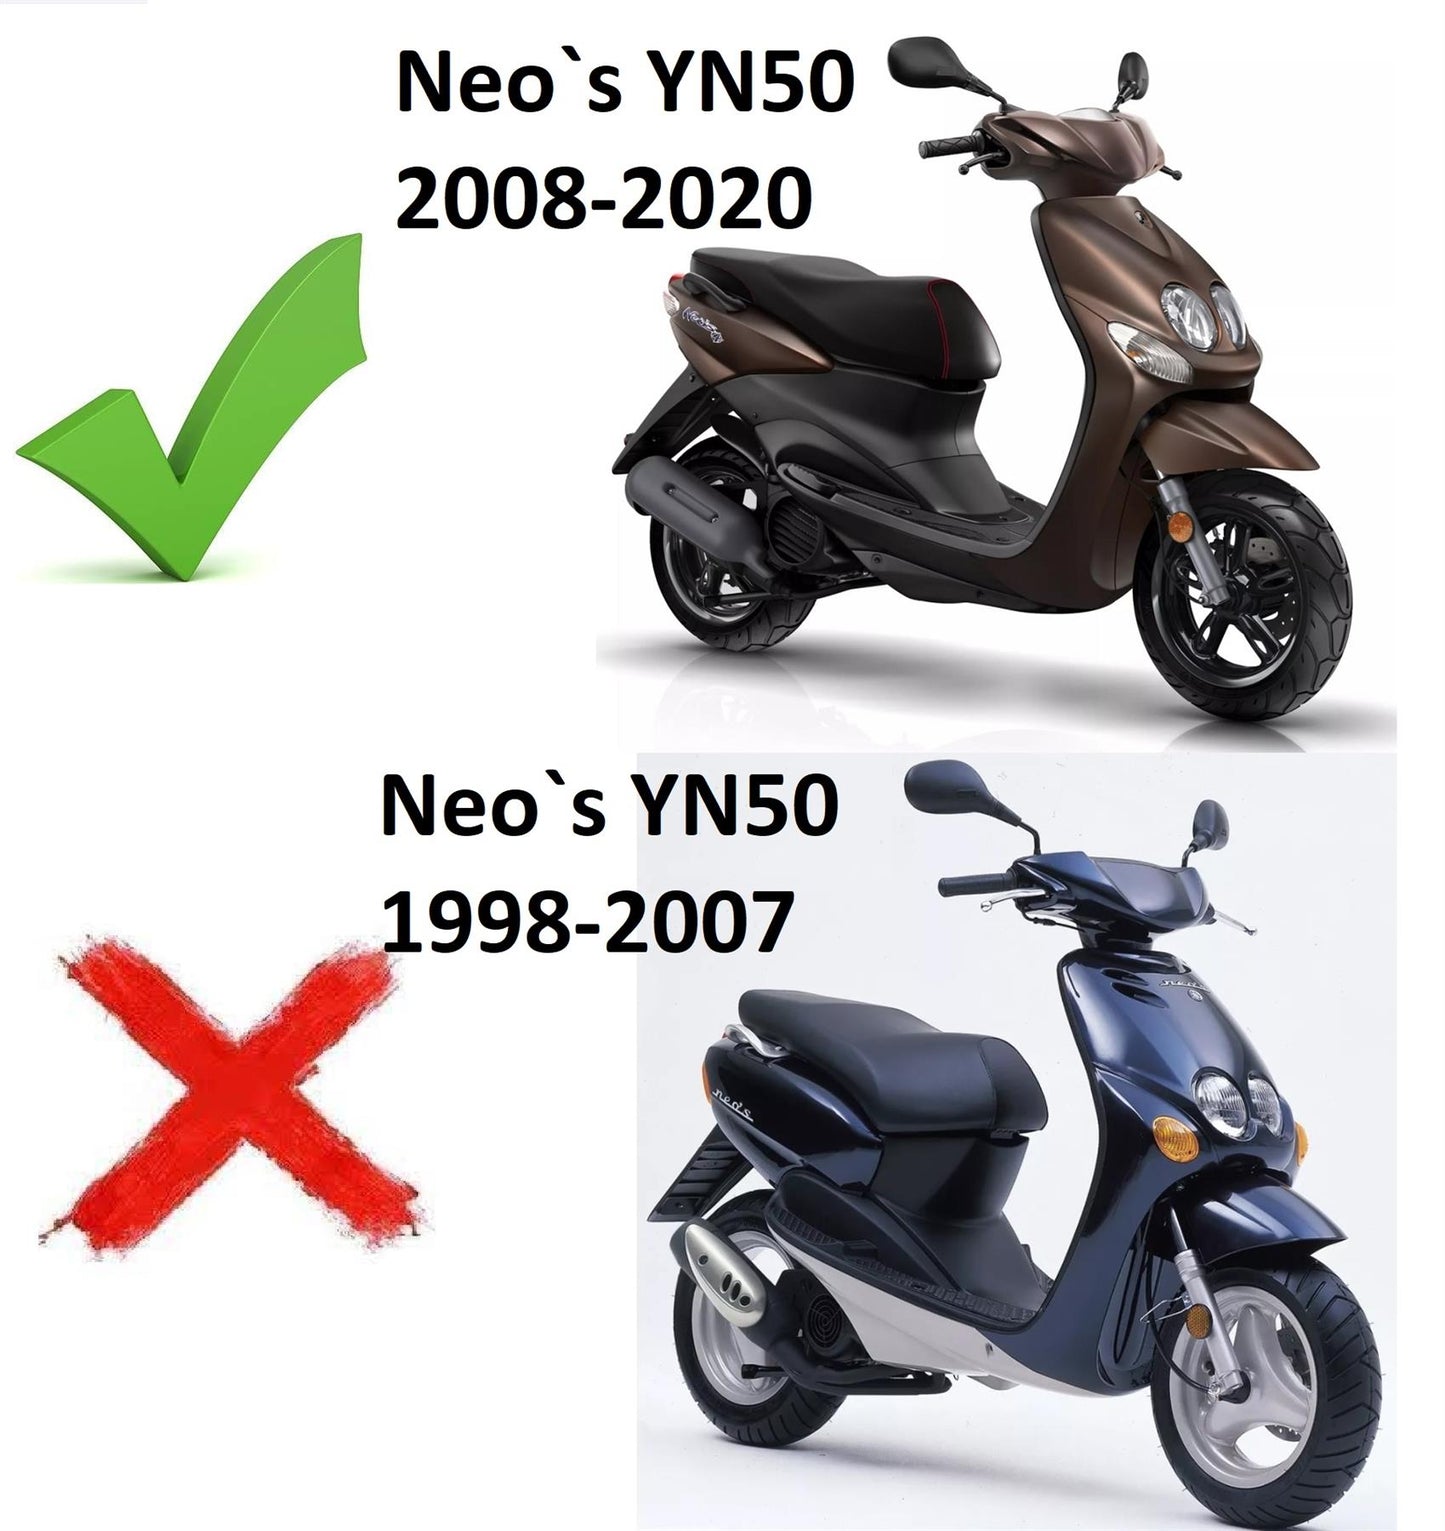 Yamaha Neo's rear rack Neo`s YN50 top box carrier 2008-2020